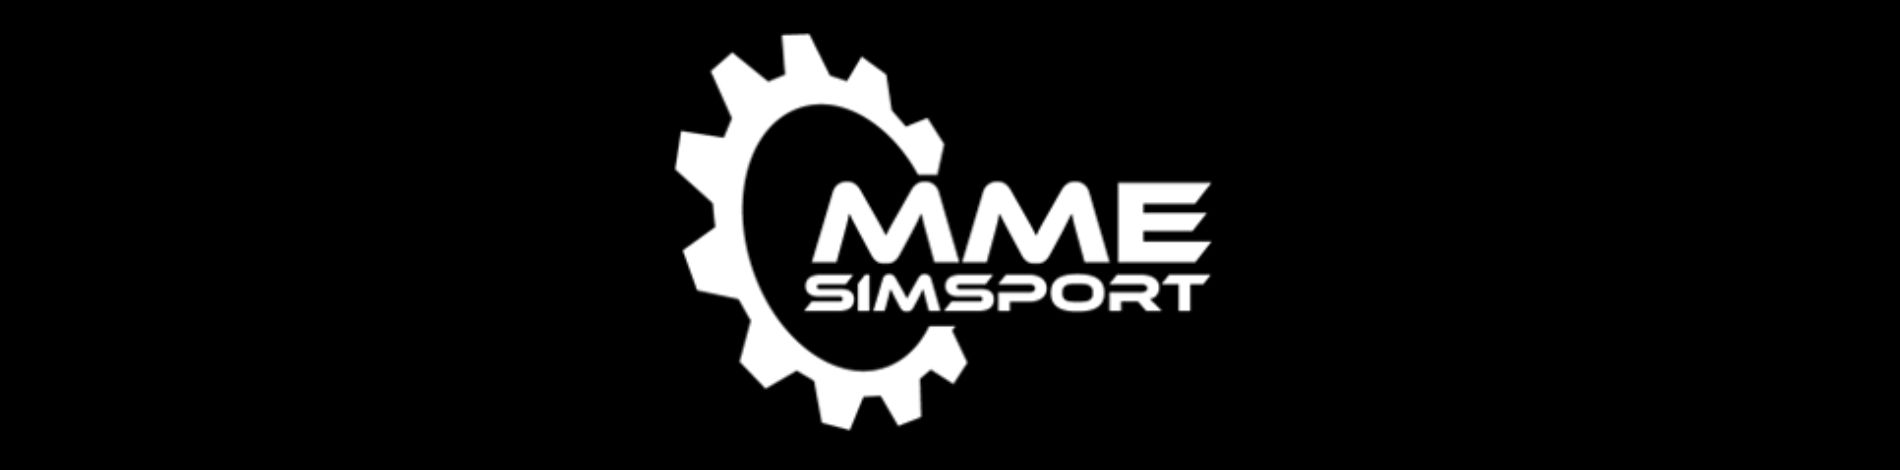 MME Motorsport